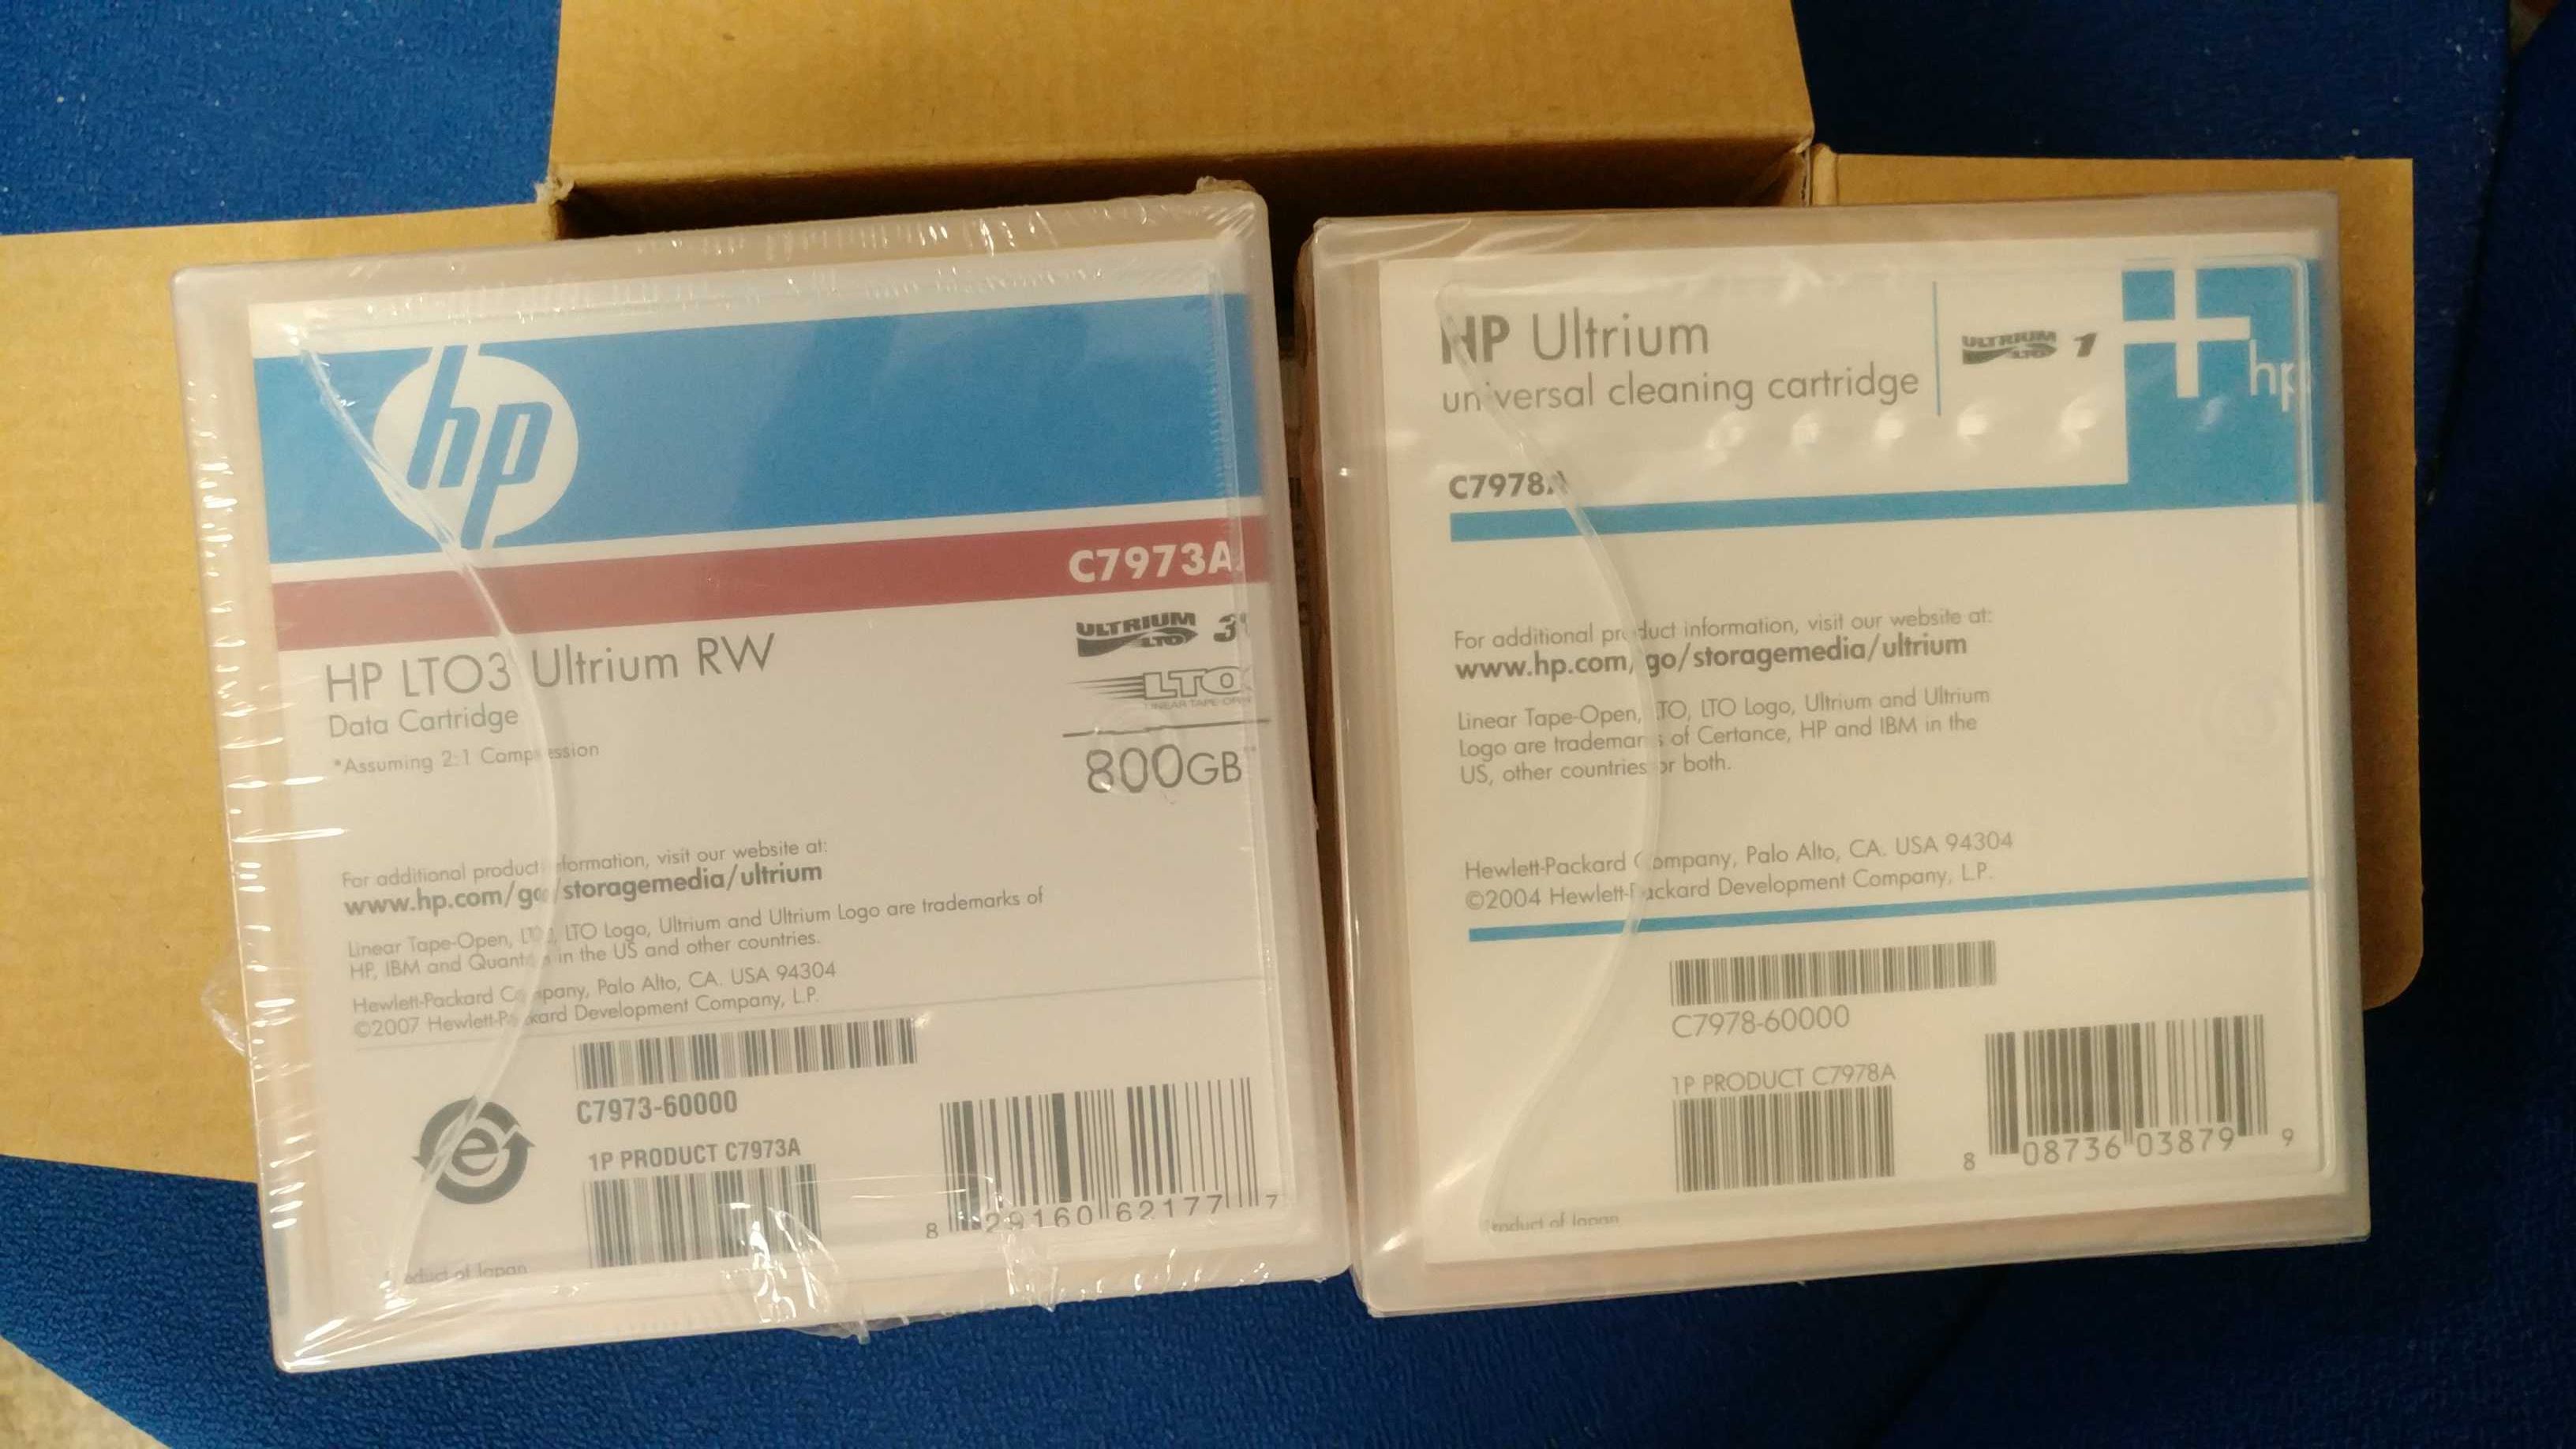 hp lto3 ultrium data  800 GB (c7973a), cleaning  (c7978a) cartridges